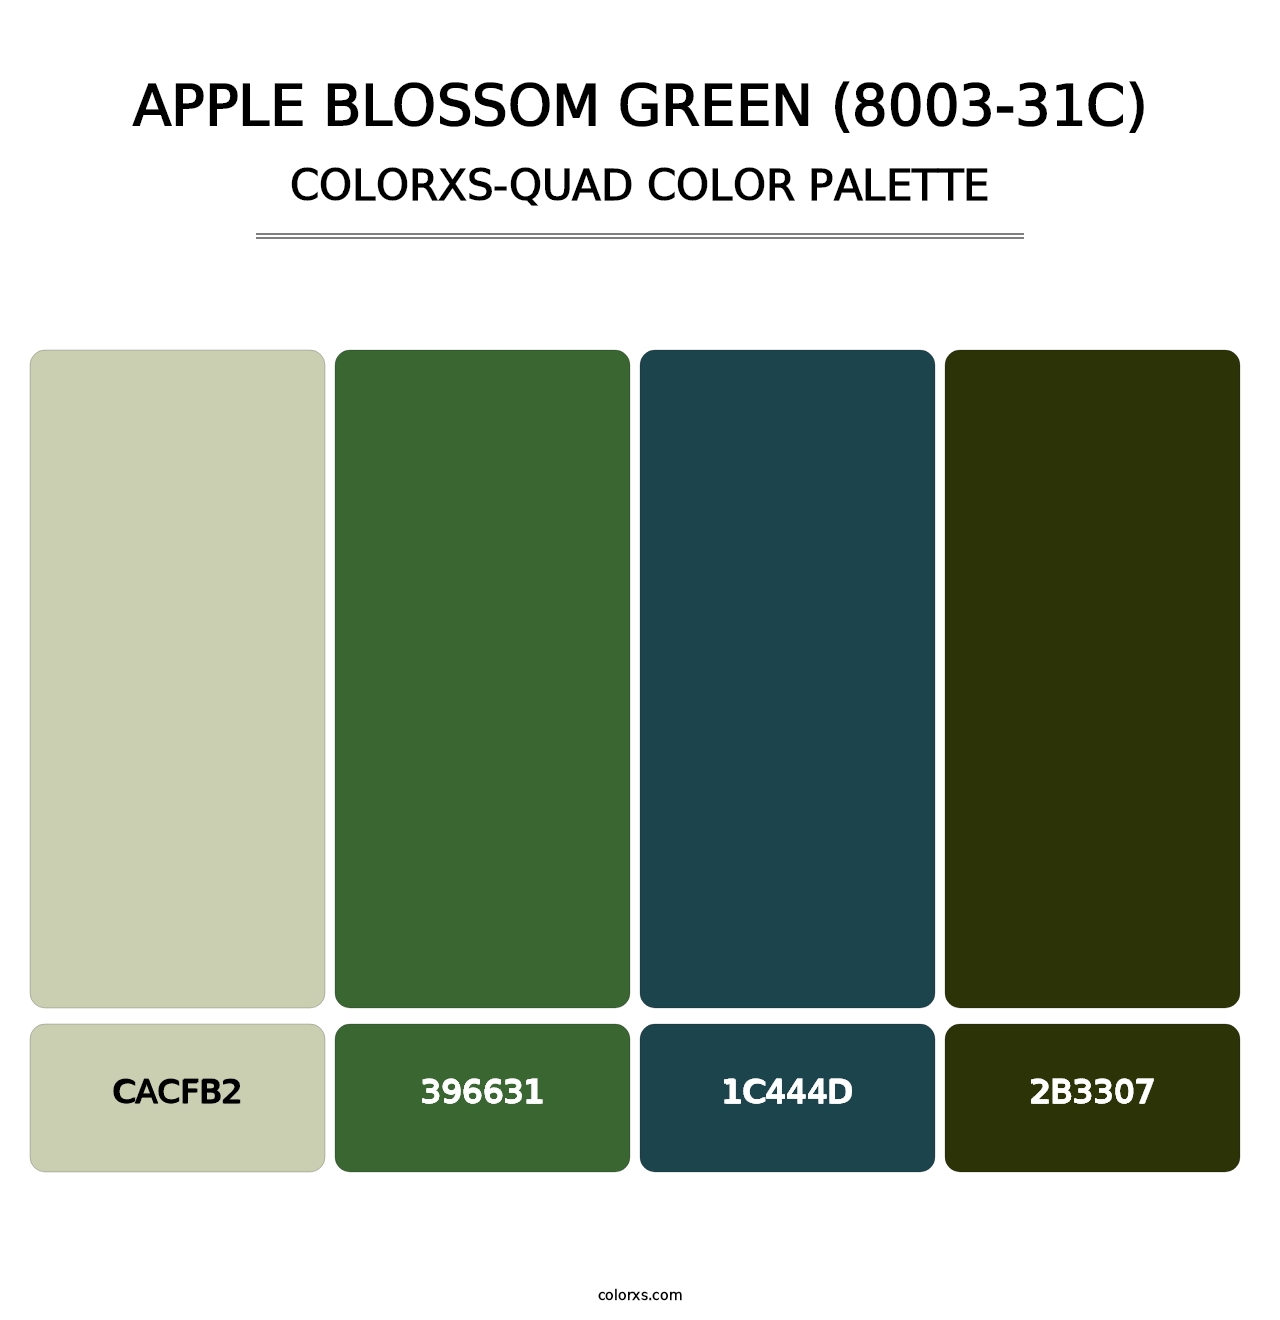 Apple Blossom Green (8003-31C) - Colorxs Quad Palette